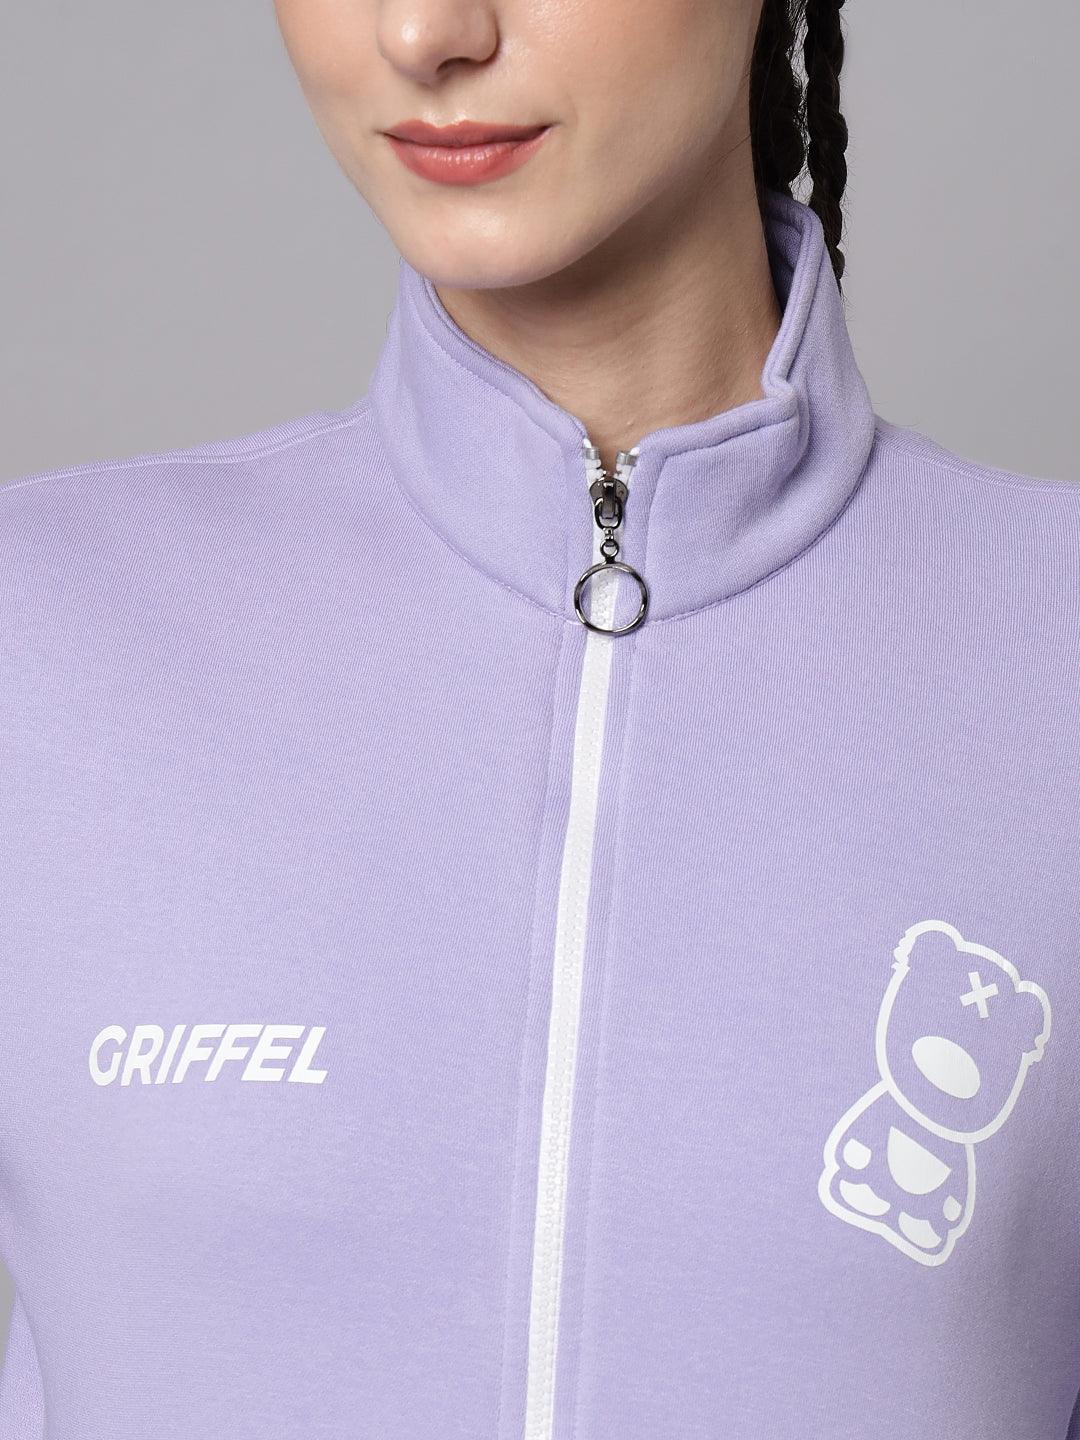 Griffel Women Color Blocked Fleece Zipper Neck Sweatshirt and Joggers Full set Mauve Tracksuit - griffel